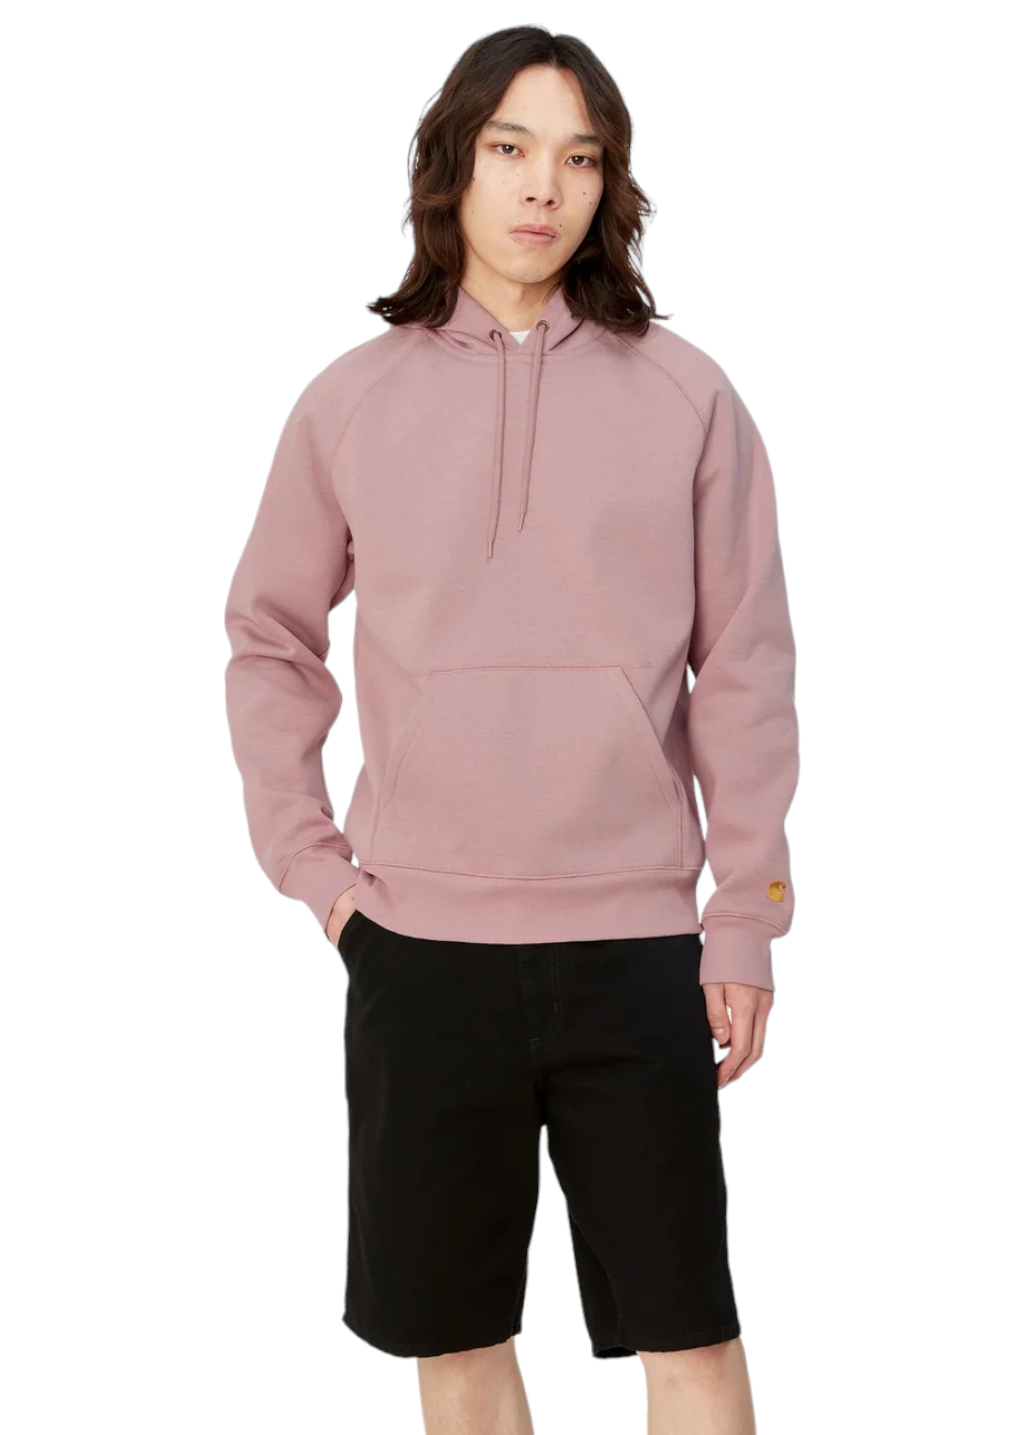 Carhartt WIP - Hooded Chase Sweatshirt - Glassy Pink/Gold - Hardpressed Print Studio Inc.